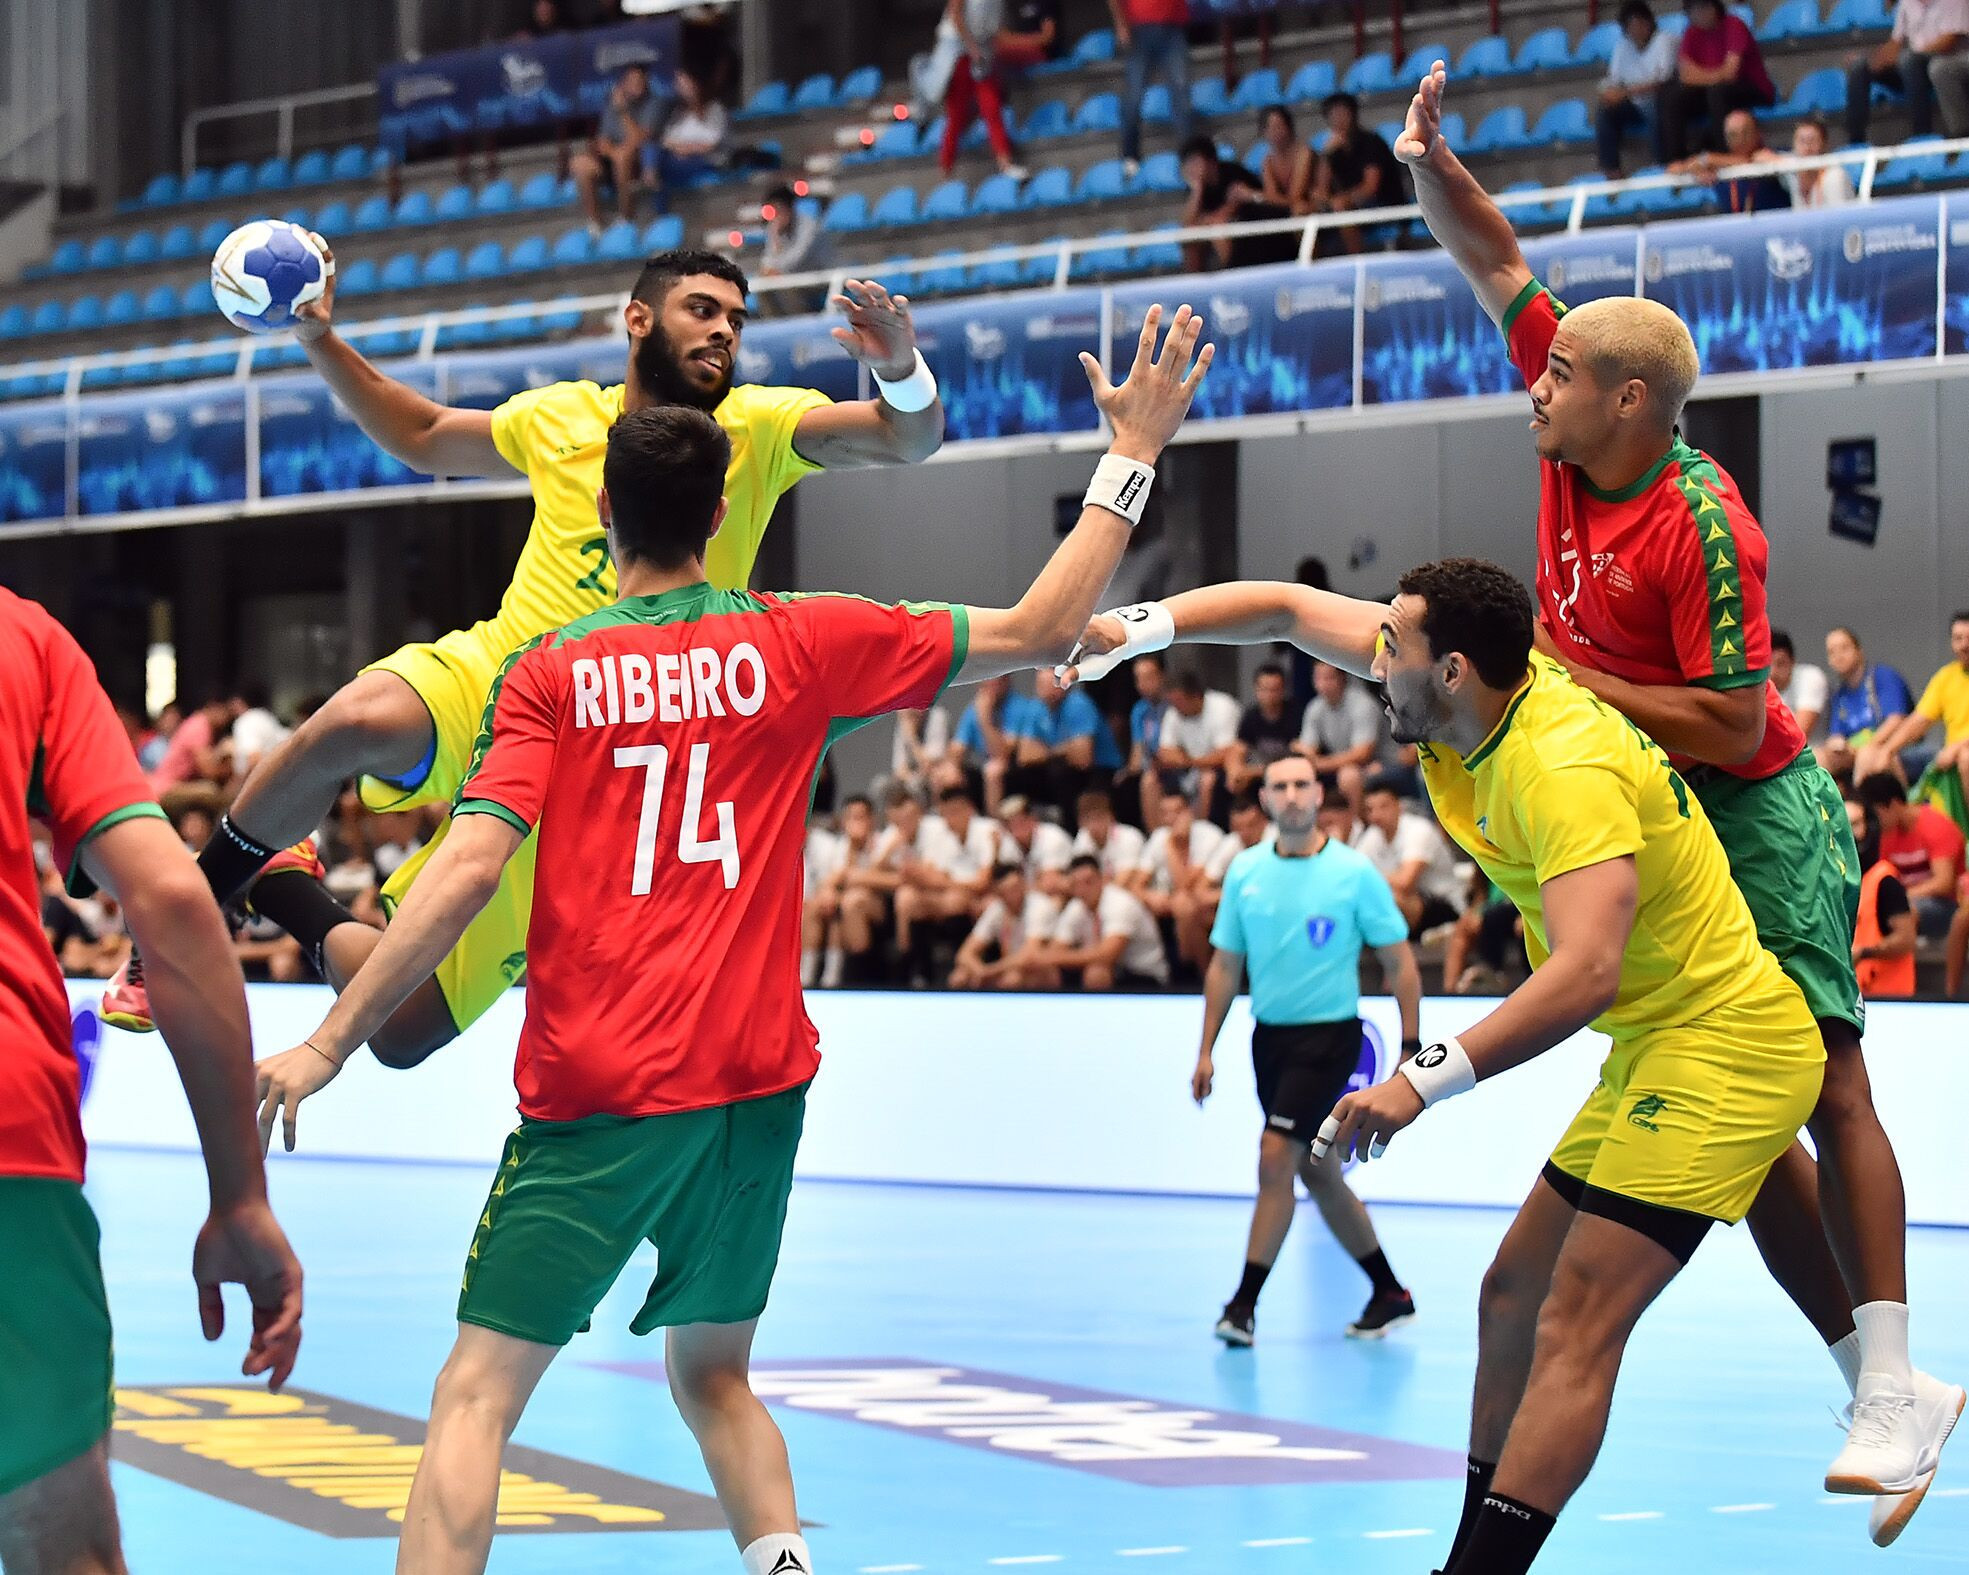 Spain sweep aside United States in Men's Junior World Handball Championship opener